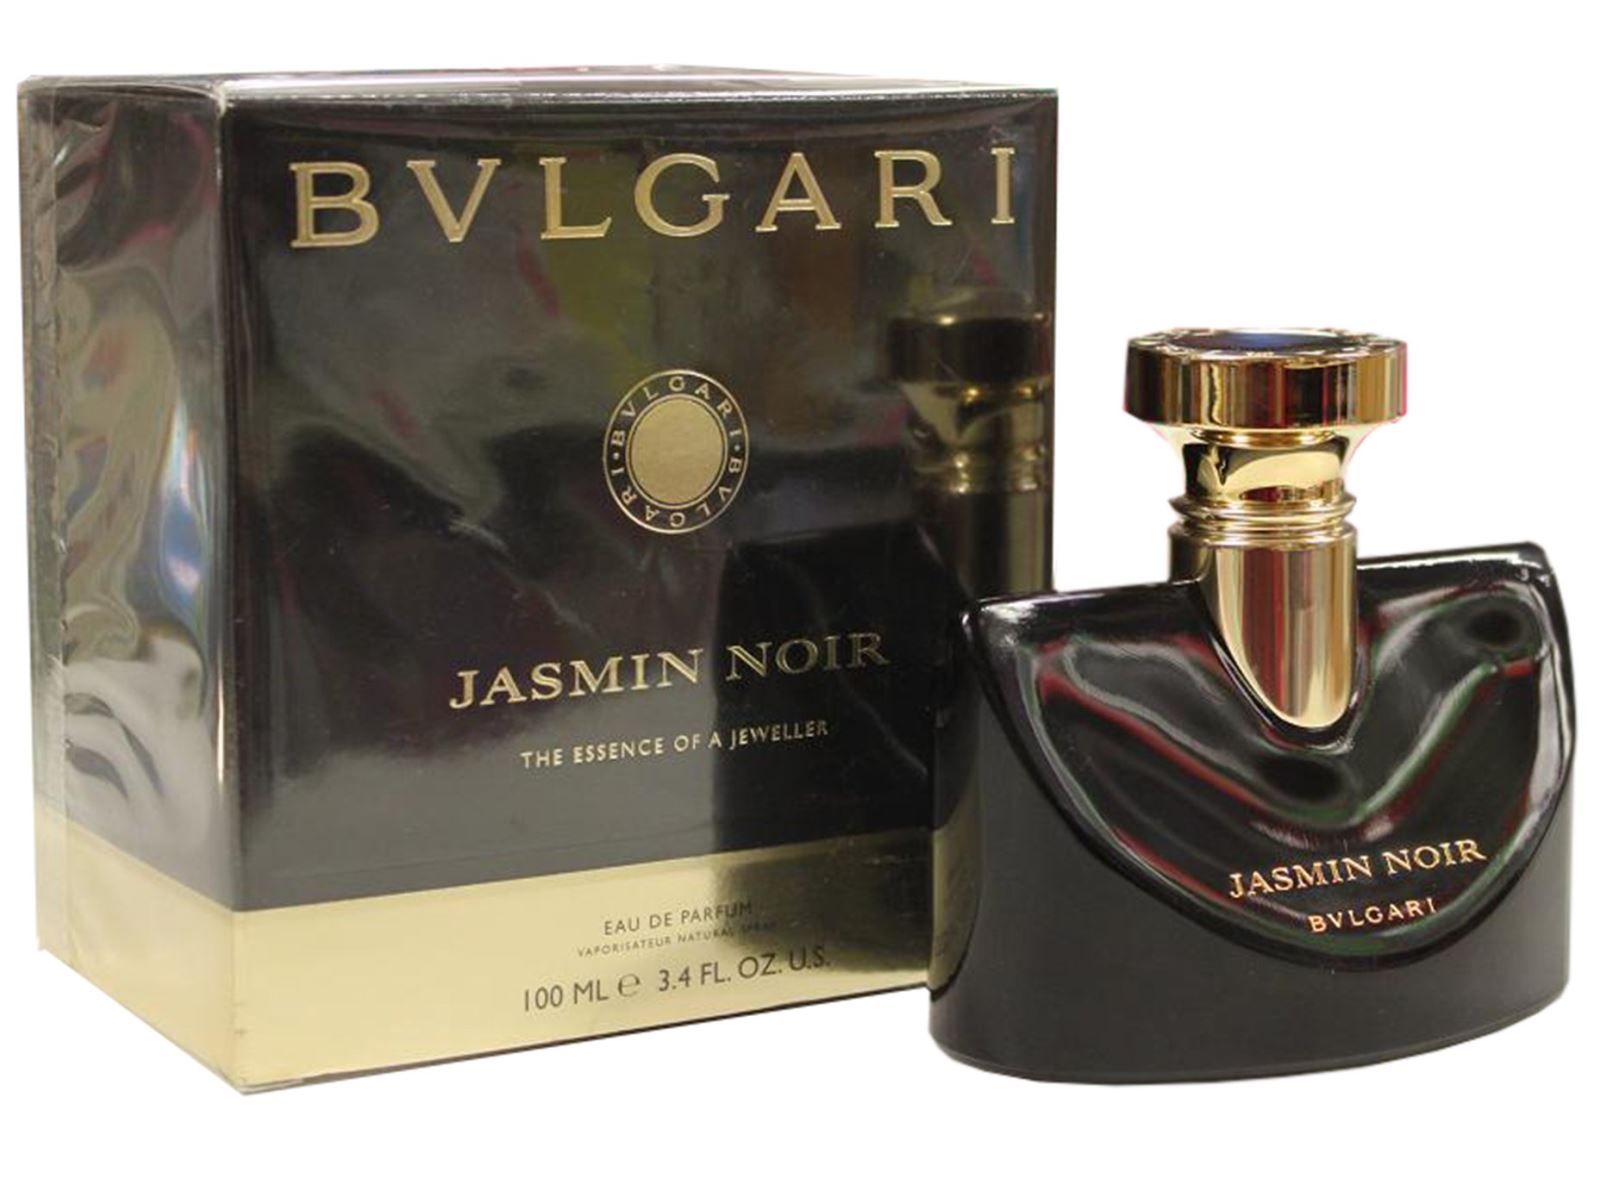 Bvlgari Jasmin Noir The Essence of a Jeweller